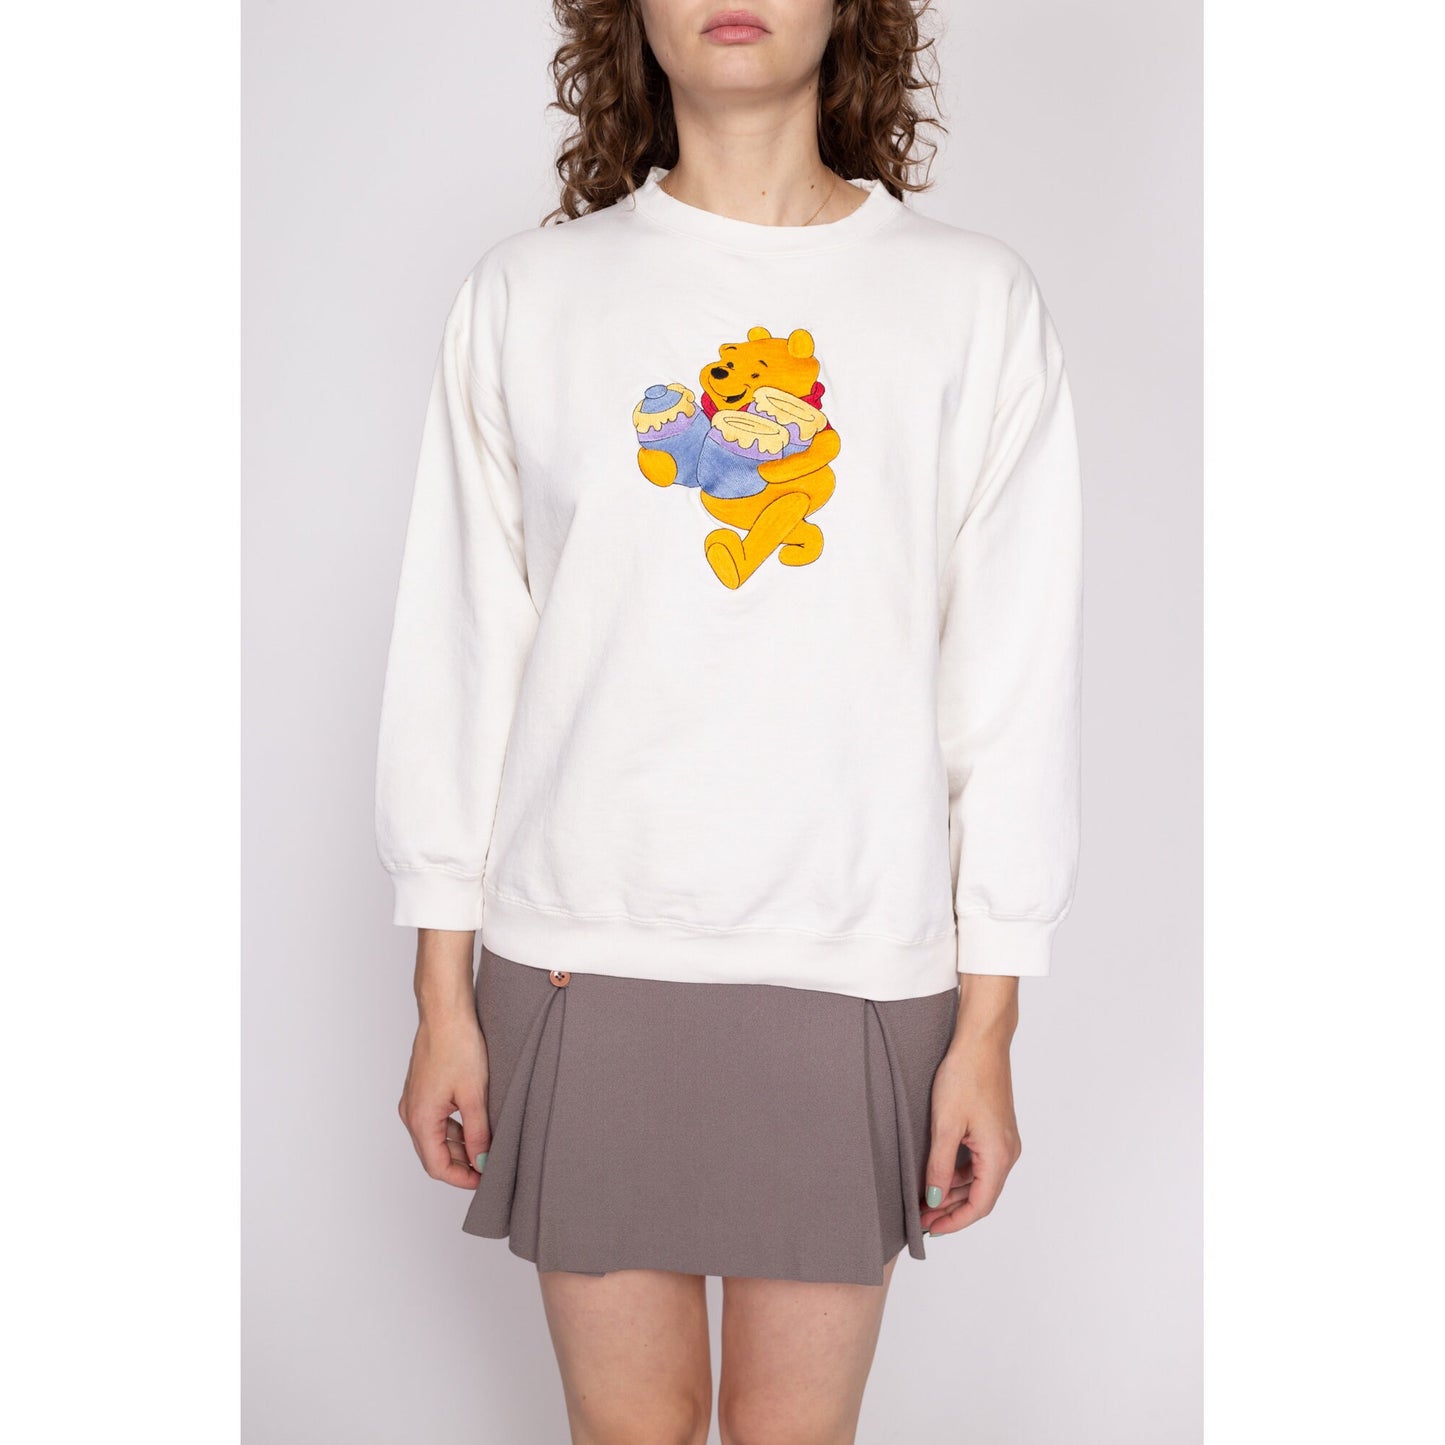 L| 90s Winnie The Pooh Sweatshirt - Large | Vintage White Disney Cartoon Embroidered Graphic Crewneck